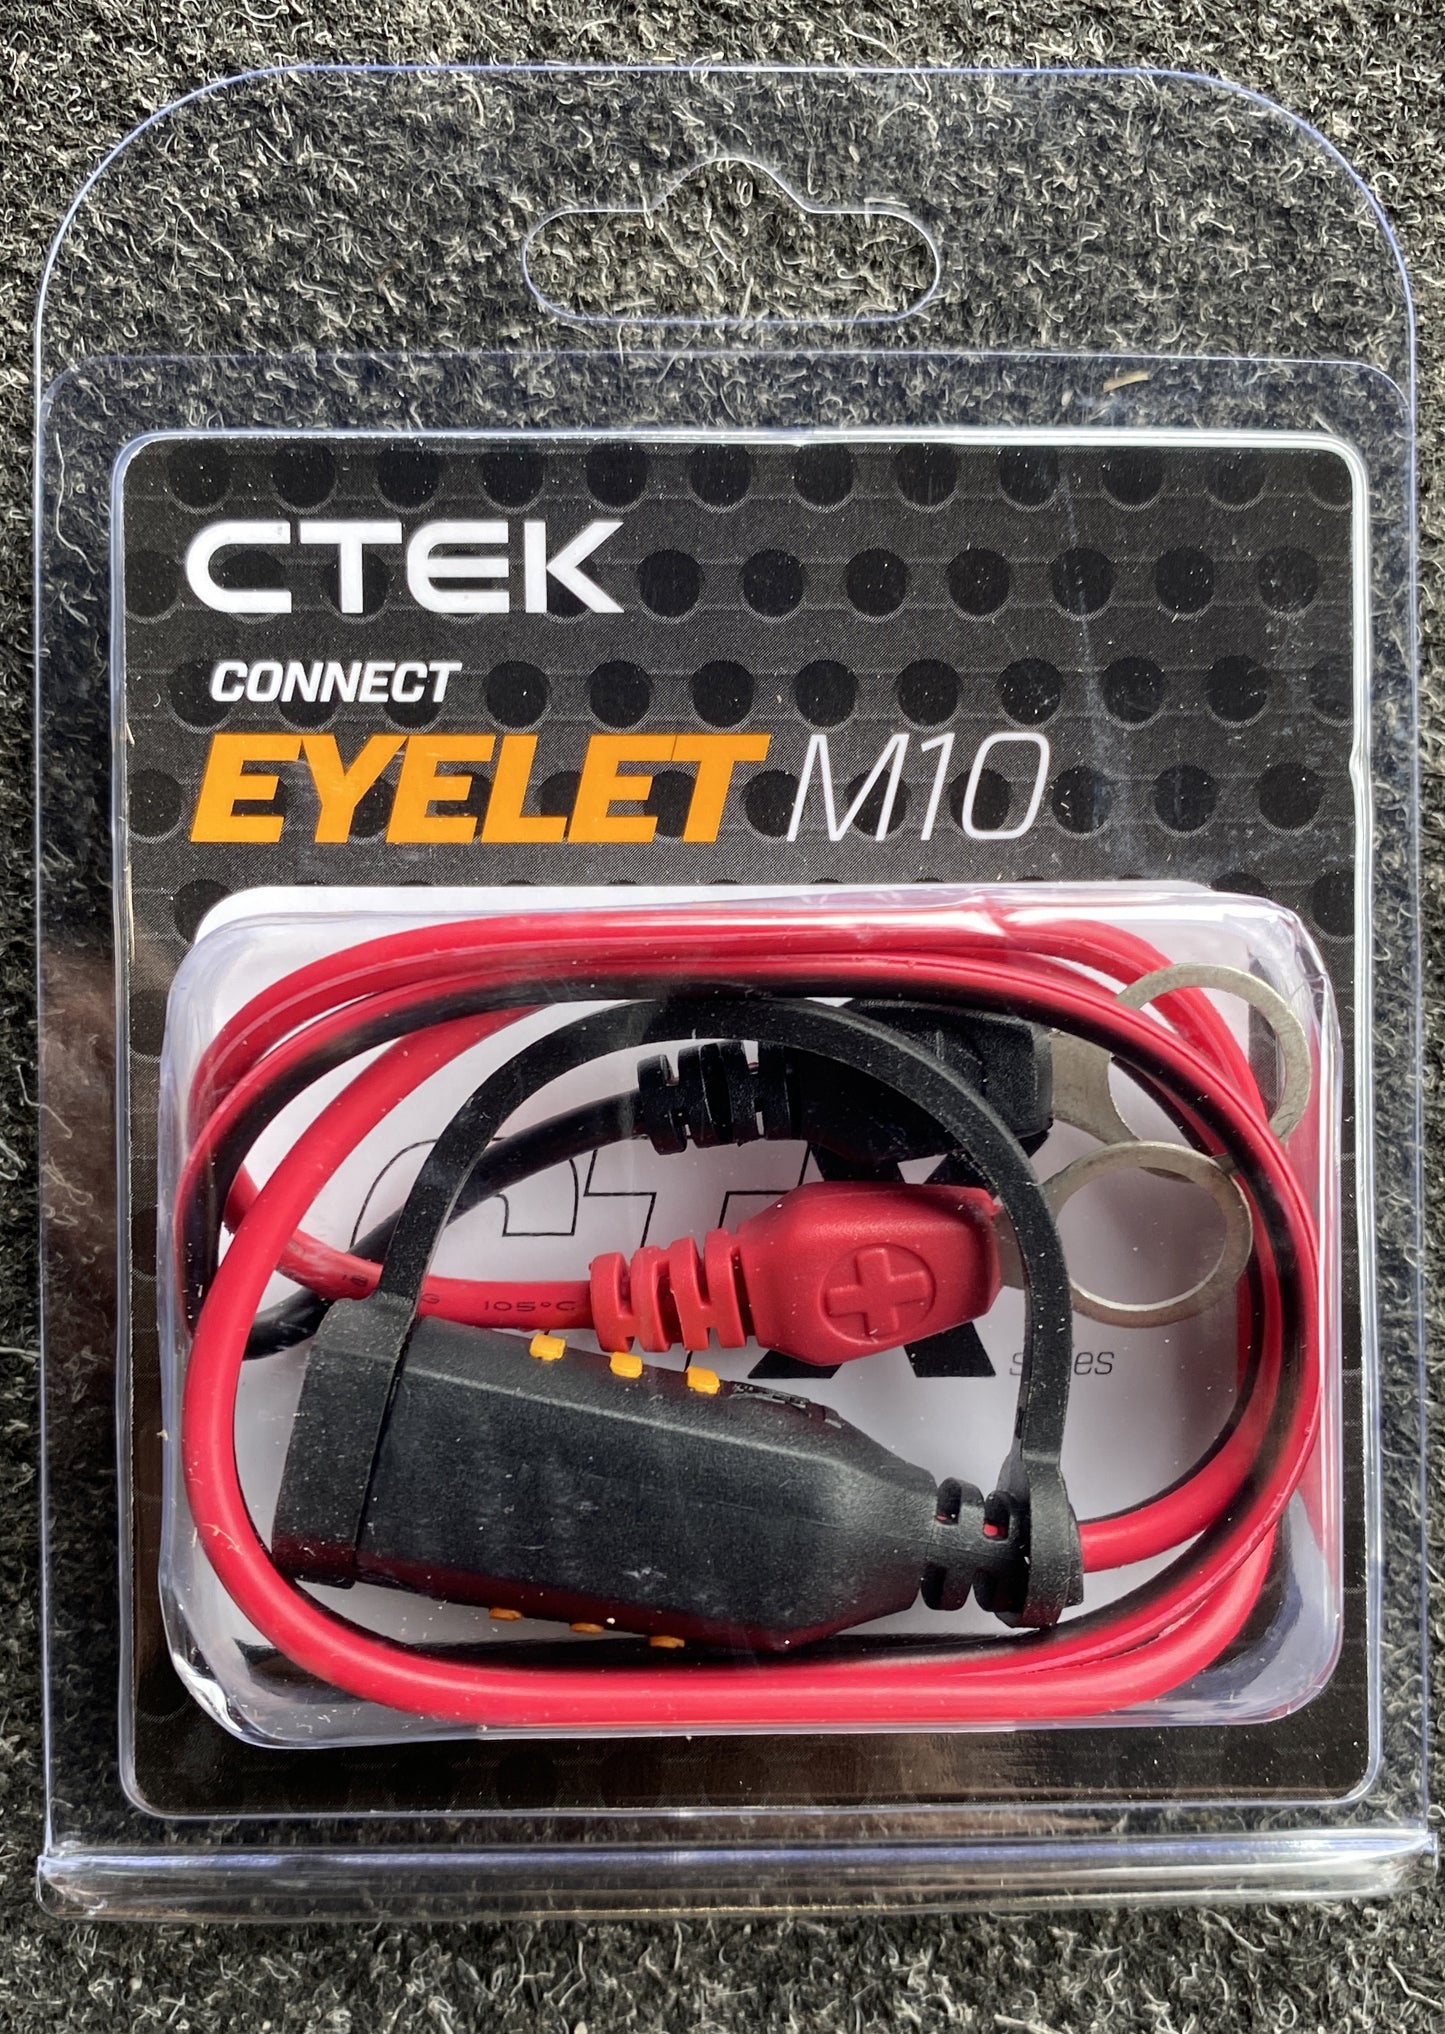 CTEK Comfort Connect M10 (10.4mm) Eyelet